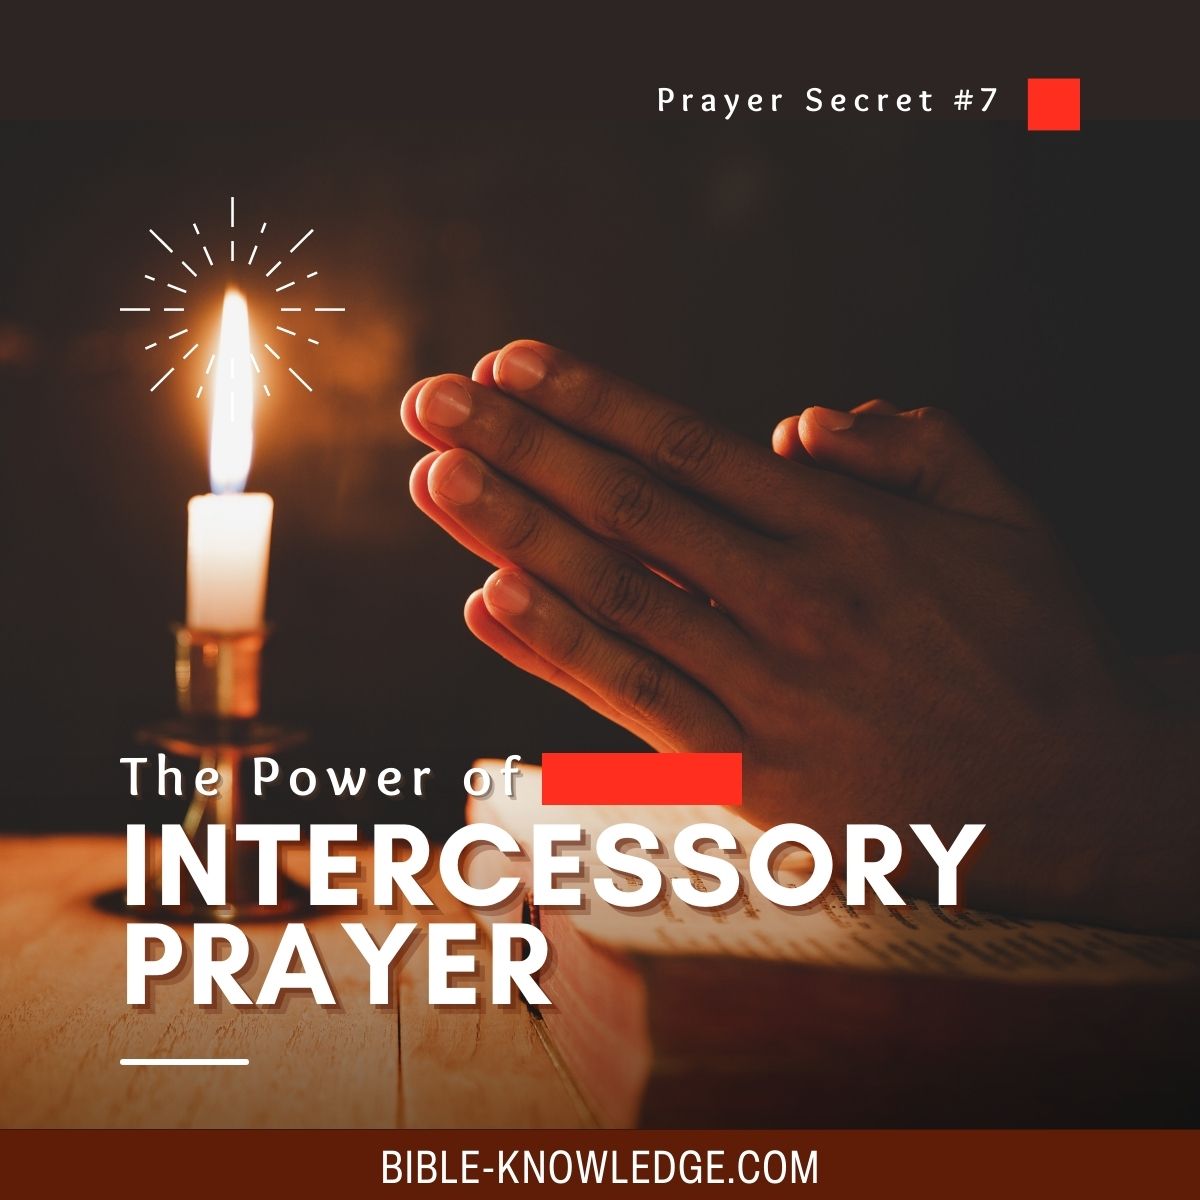 The Power of Intercessory Prayer